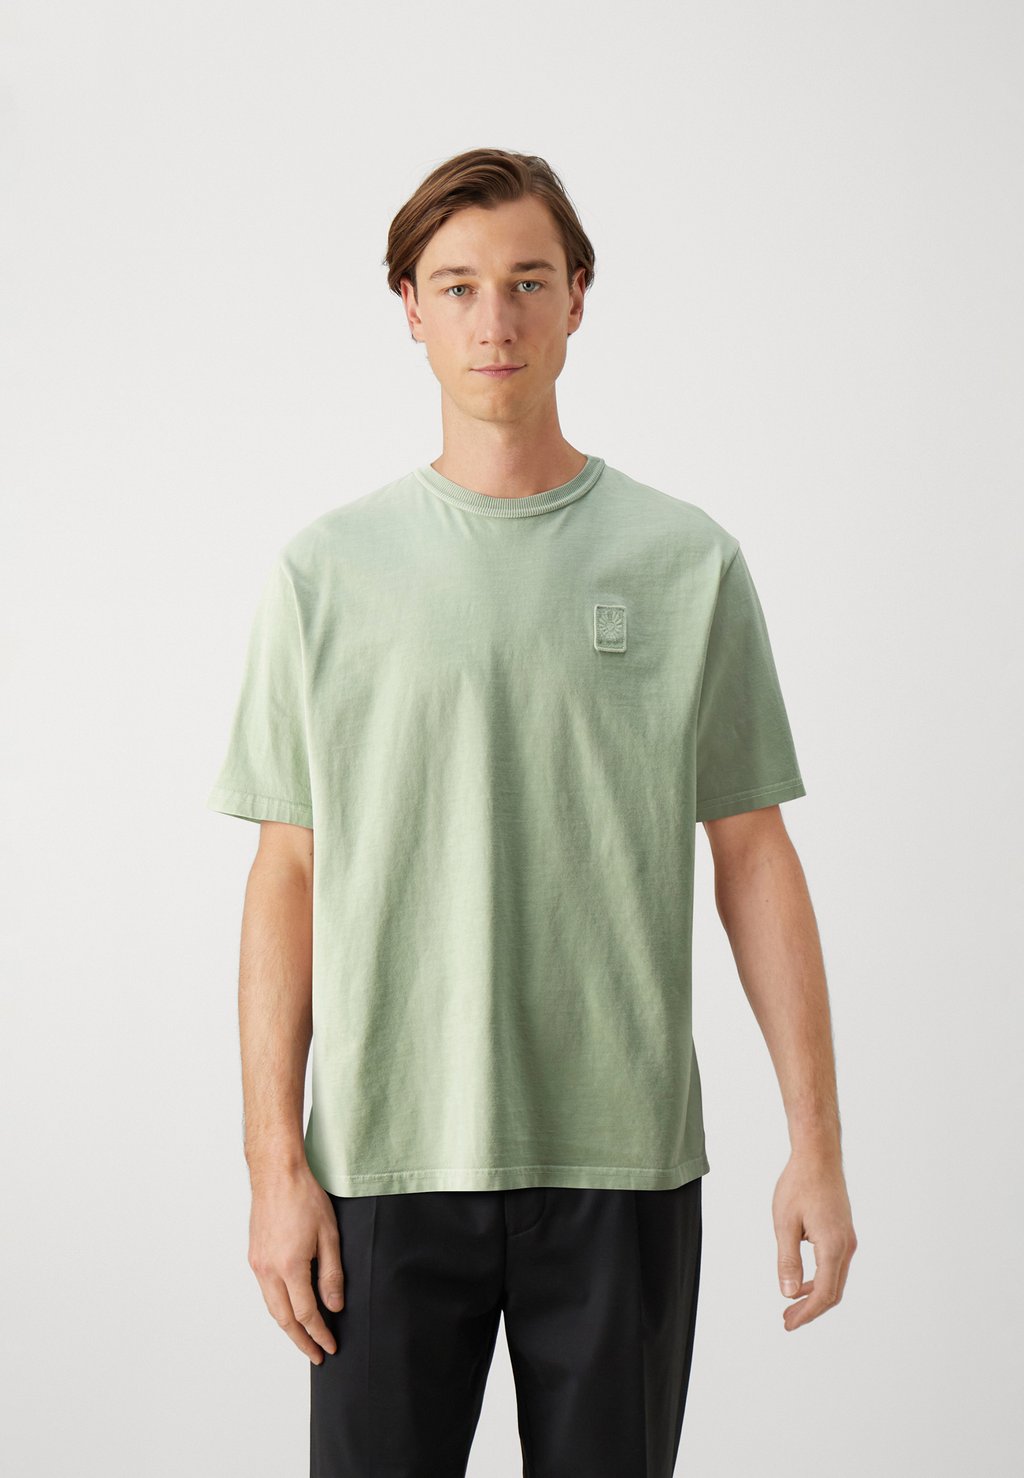 футболка с длинными рукавами long sleved belstaff цвет mineral green Футболка базовая MINERAL OUTLINER Belstaff, цвет echo green